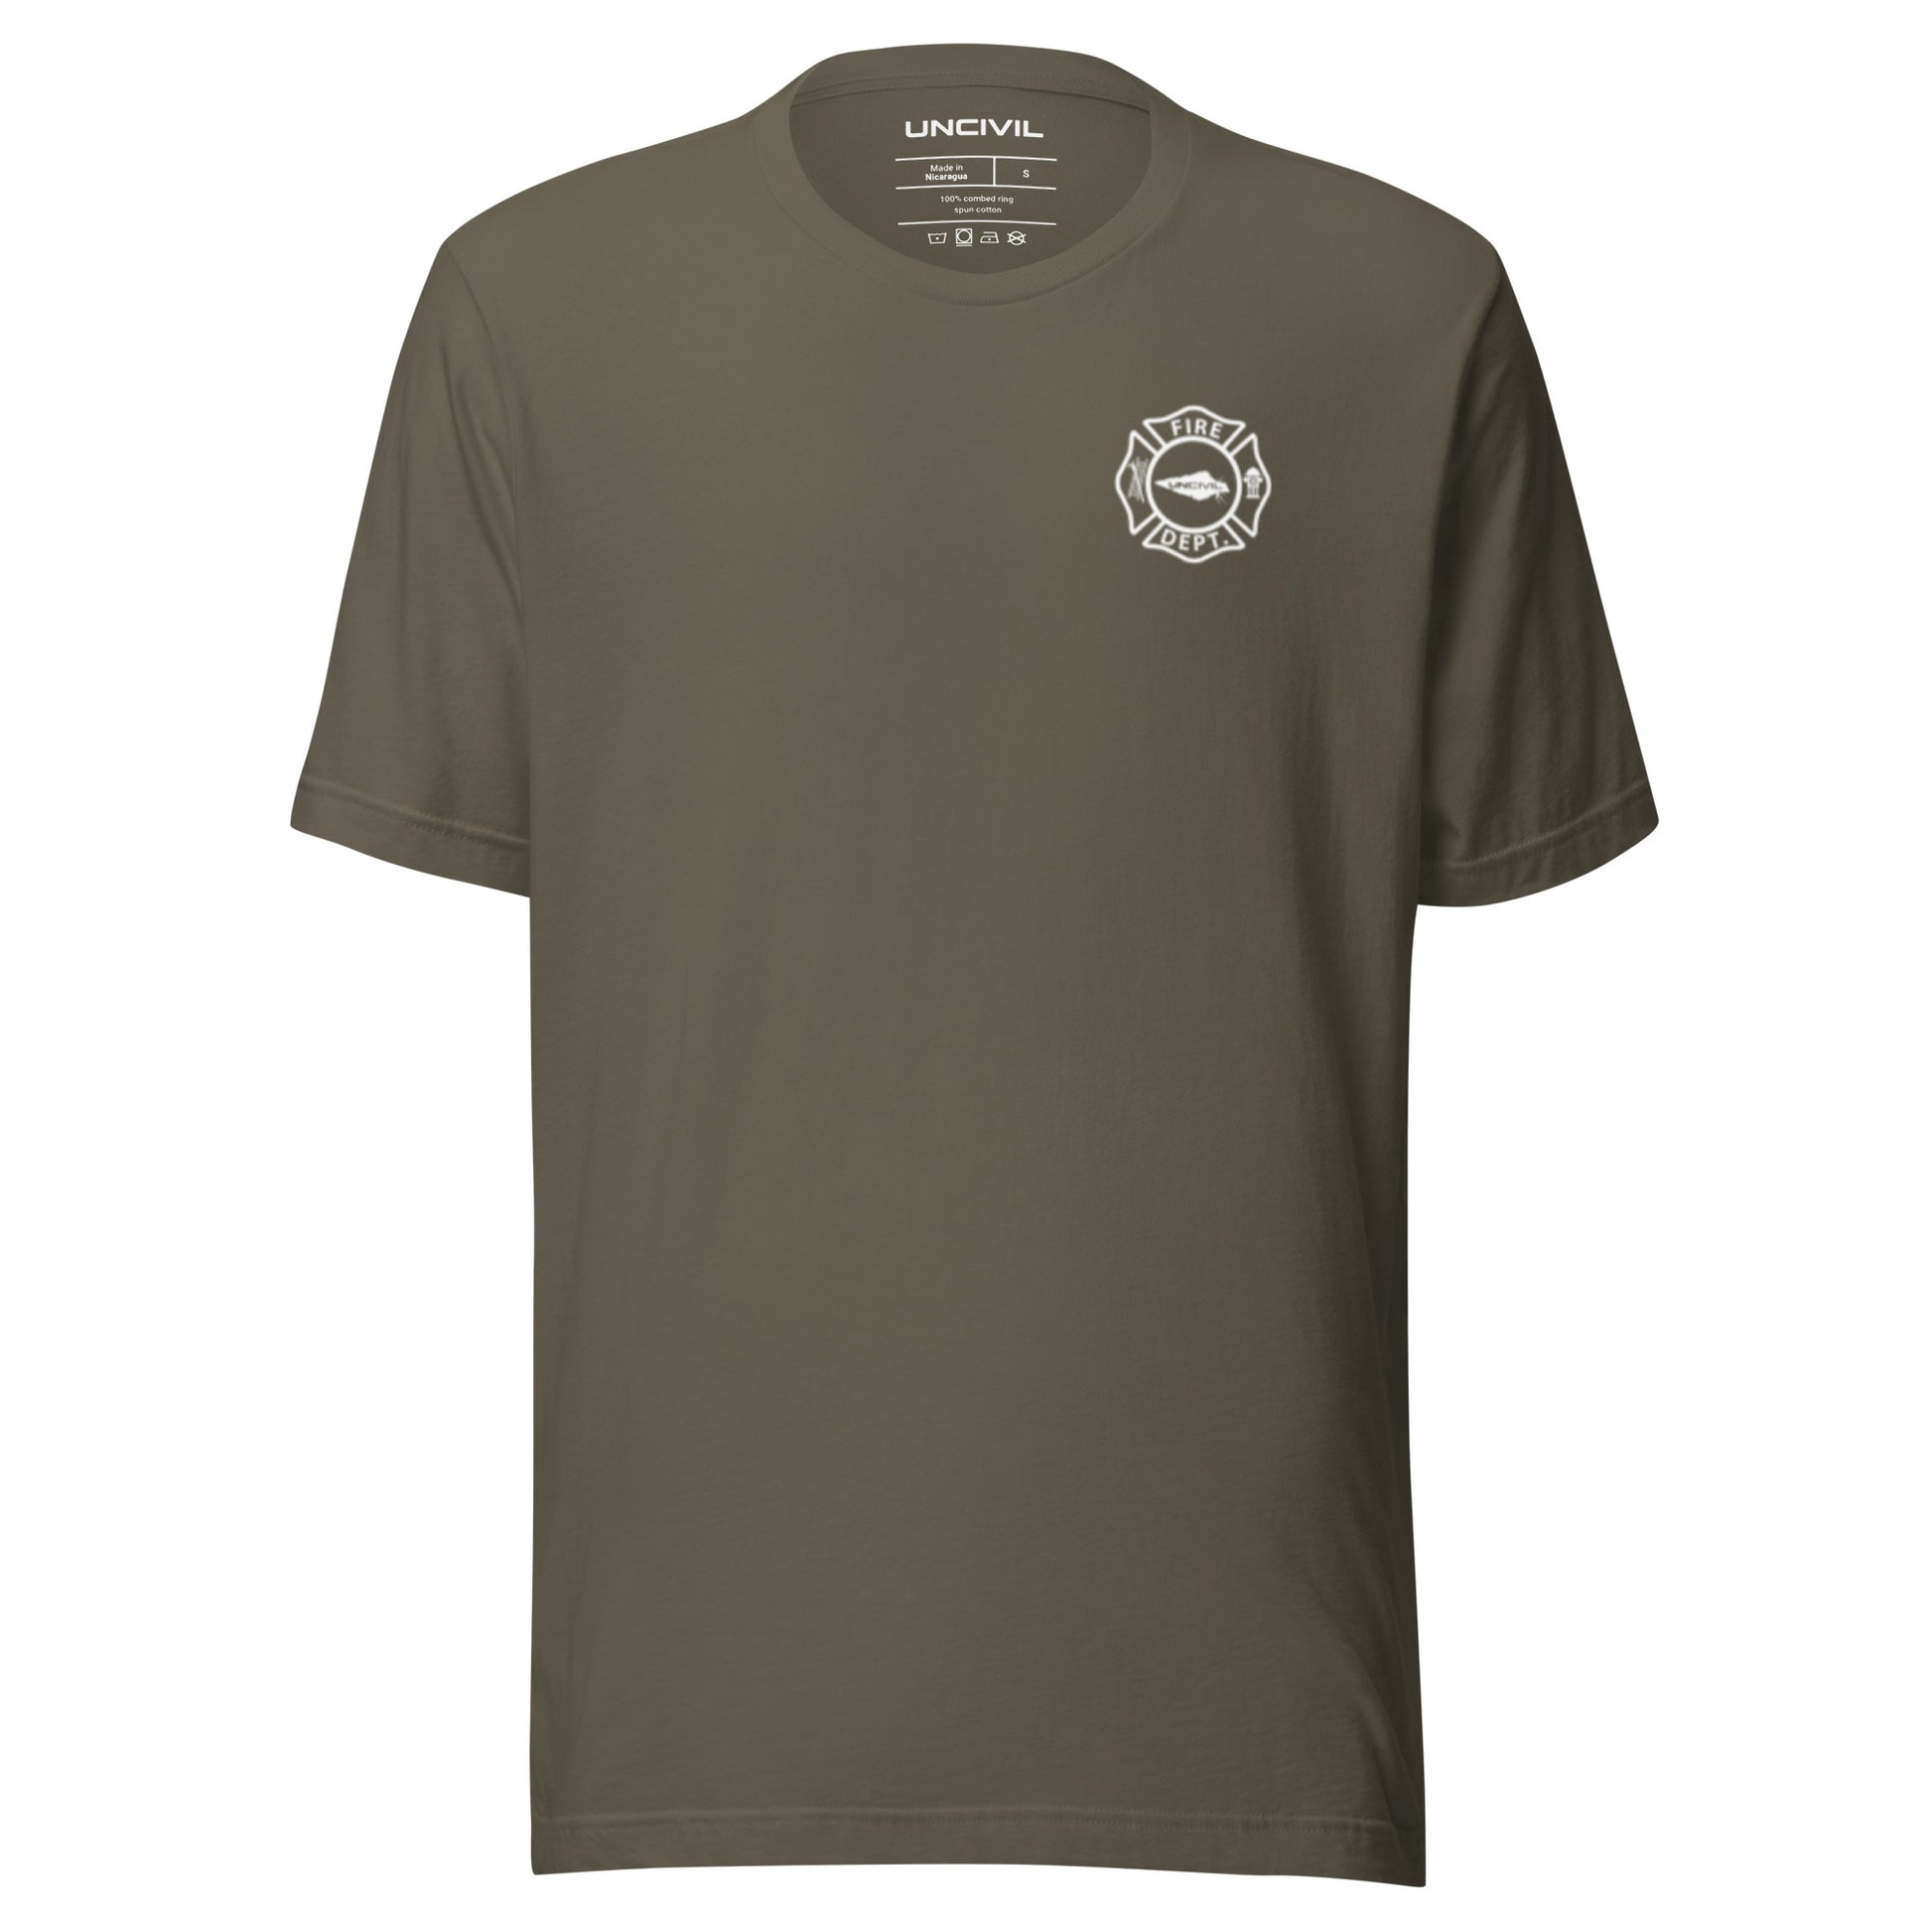 Keys to the City Halligan shirt, Army Green unisex t-shirt with maltese cross